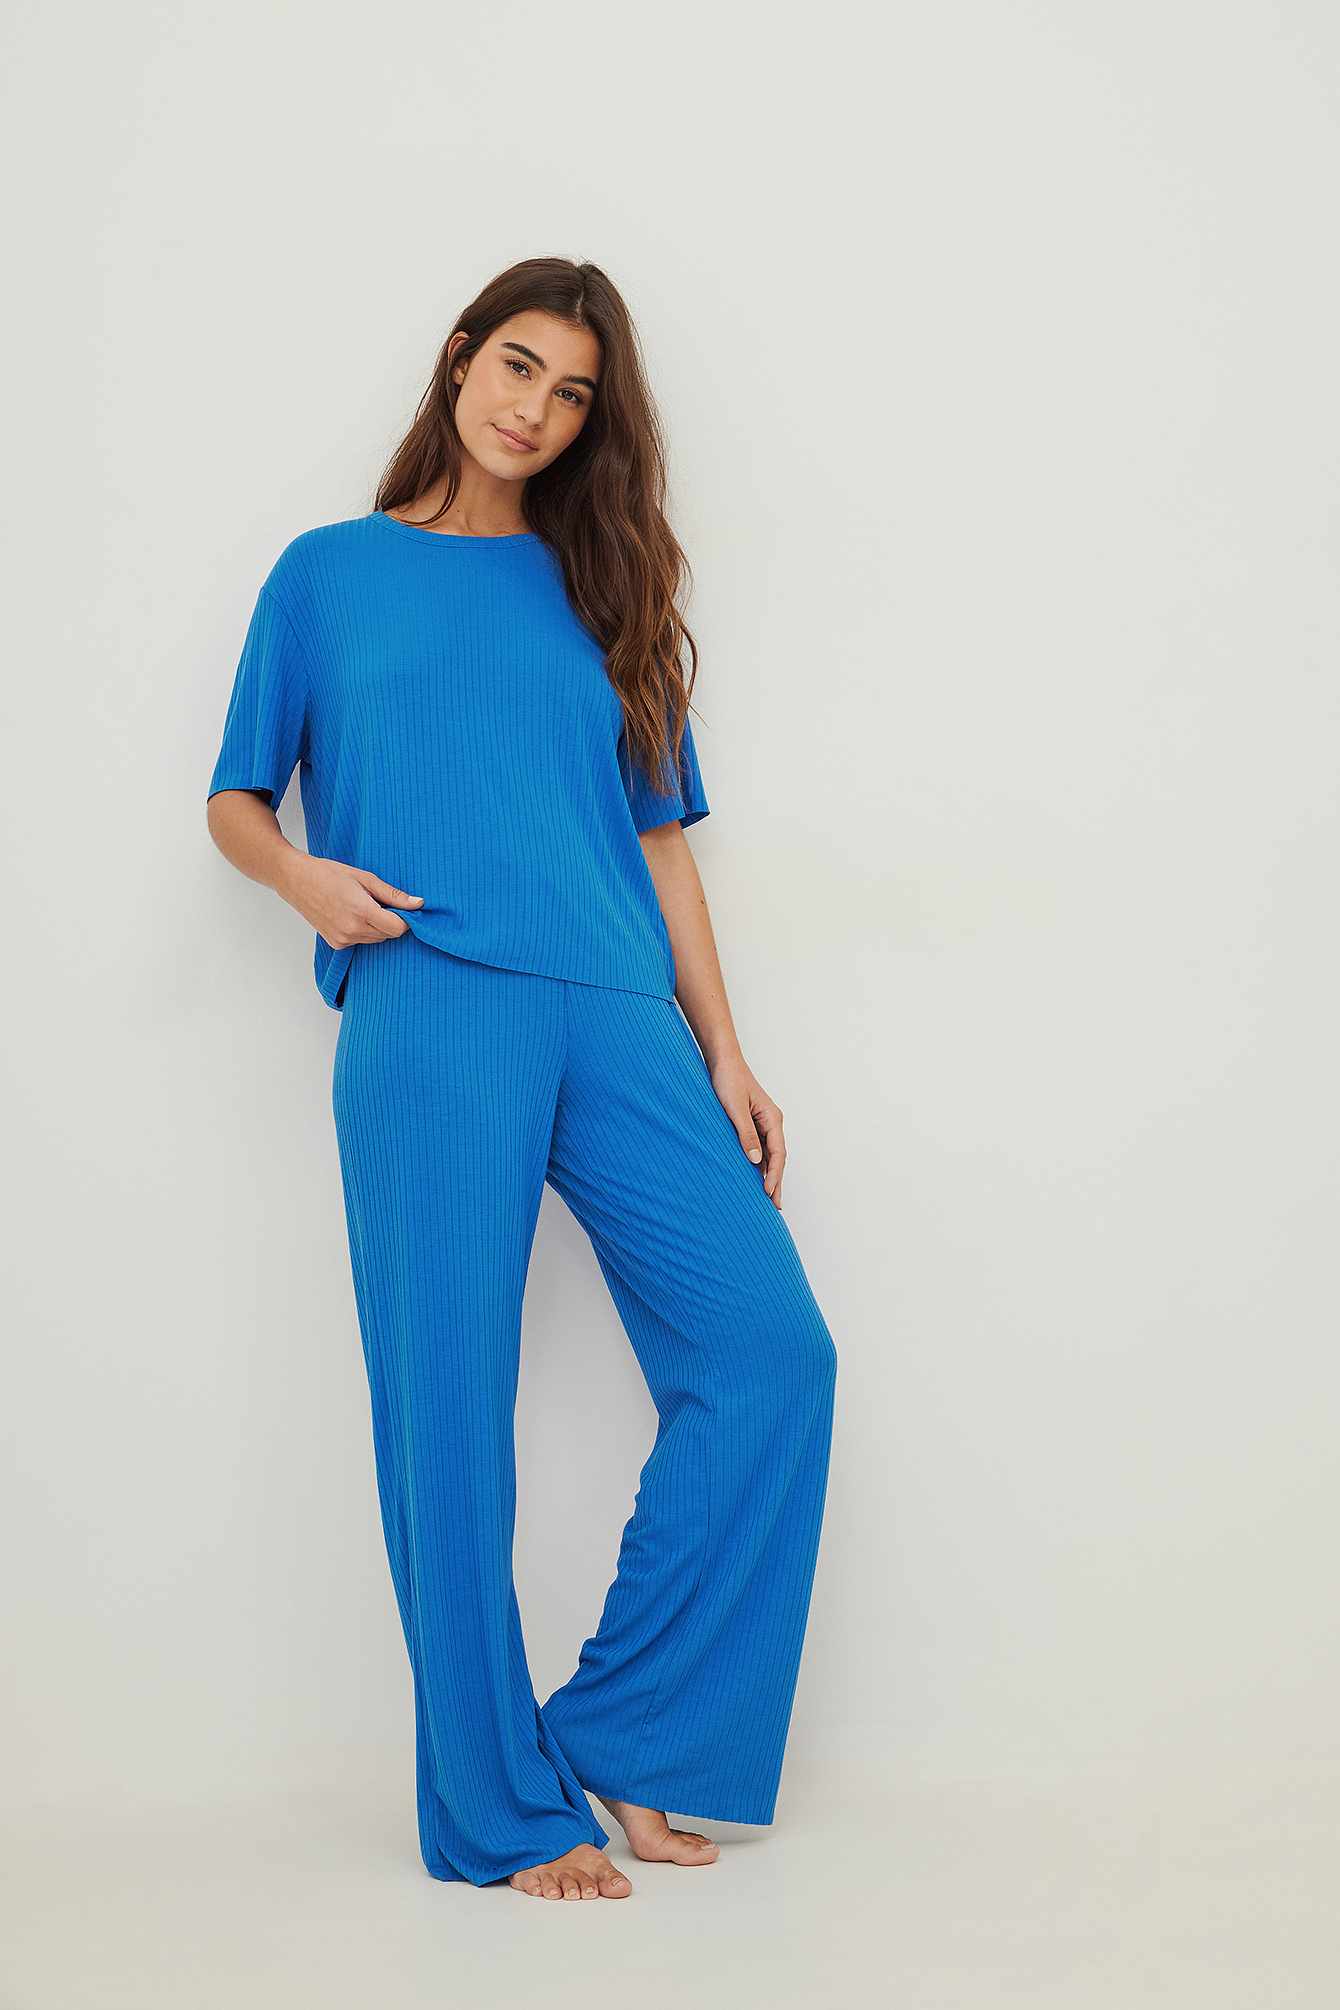 2-delige pyjama set maat 12 Item #P809 Rayon Floral Periwinkle Blue lounge set Kleding Dameskleding Pyjamas & Badjassen Nachthemden en tops 